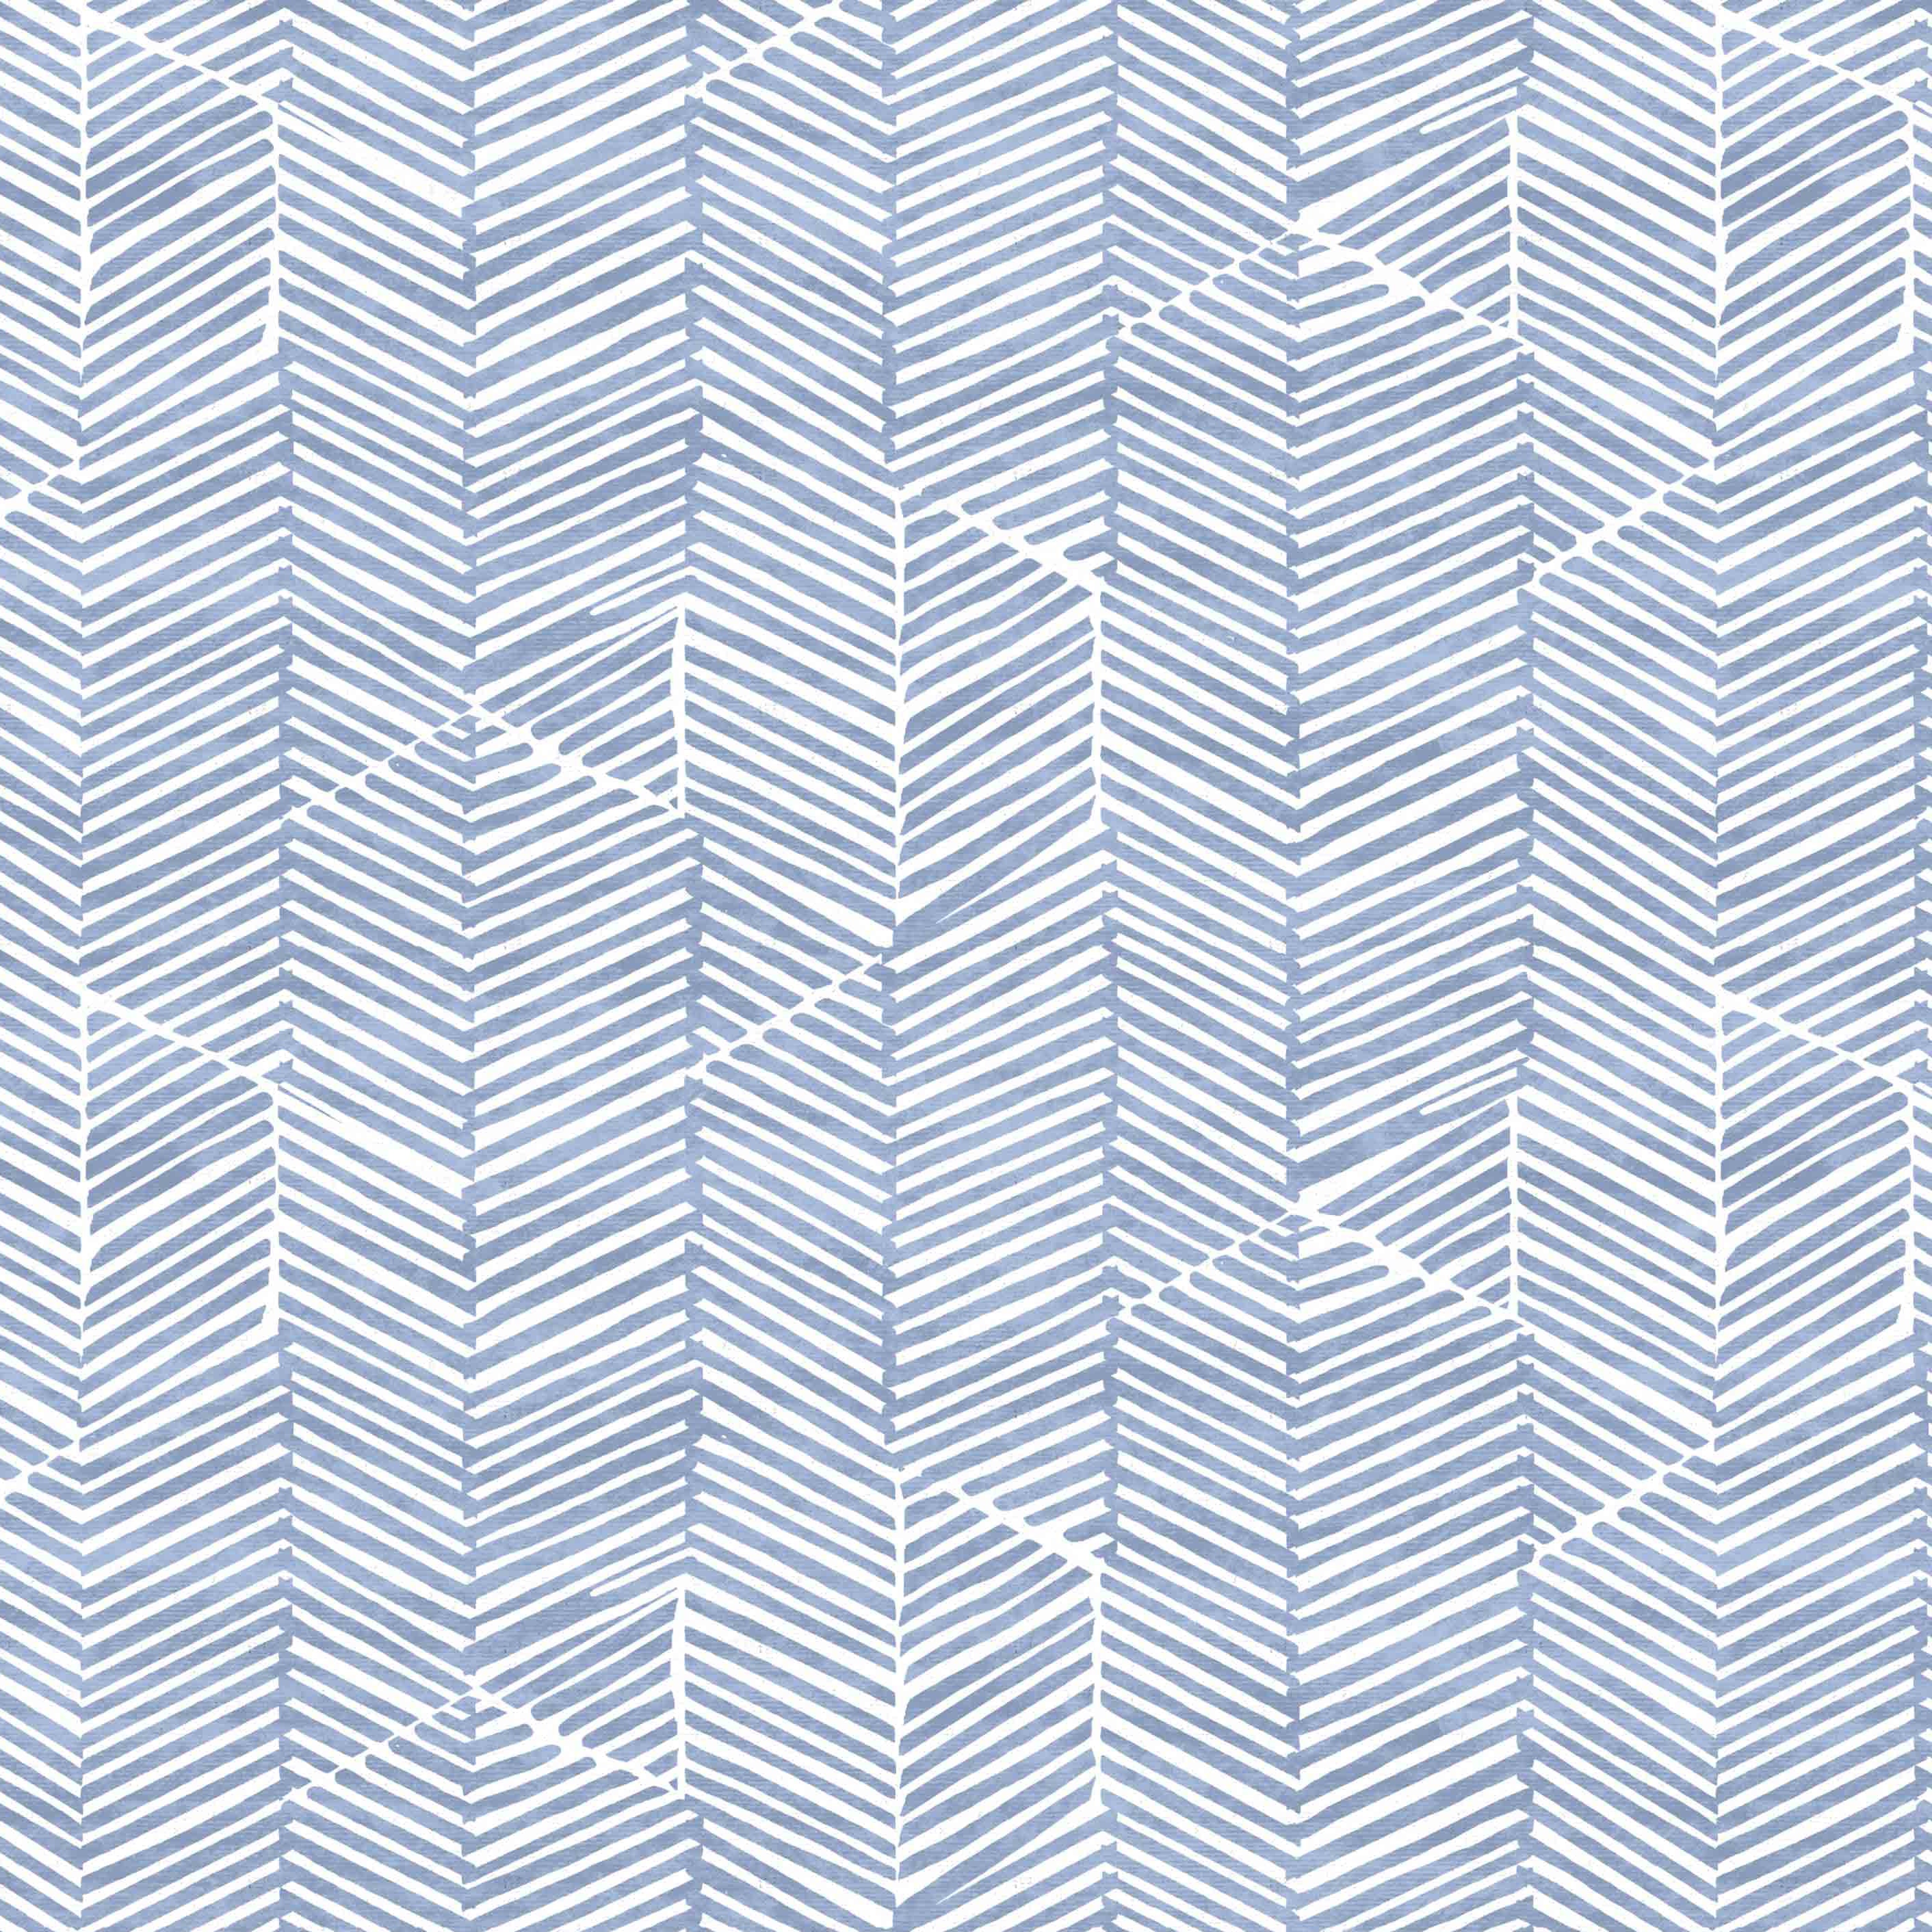 Detail of fabric in a dense herringbone print in blue on a white field.